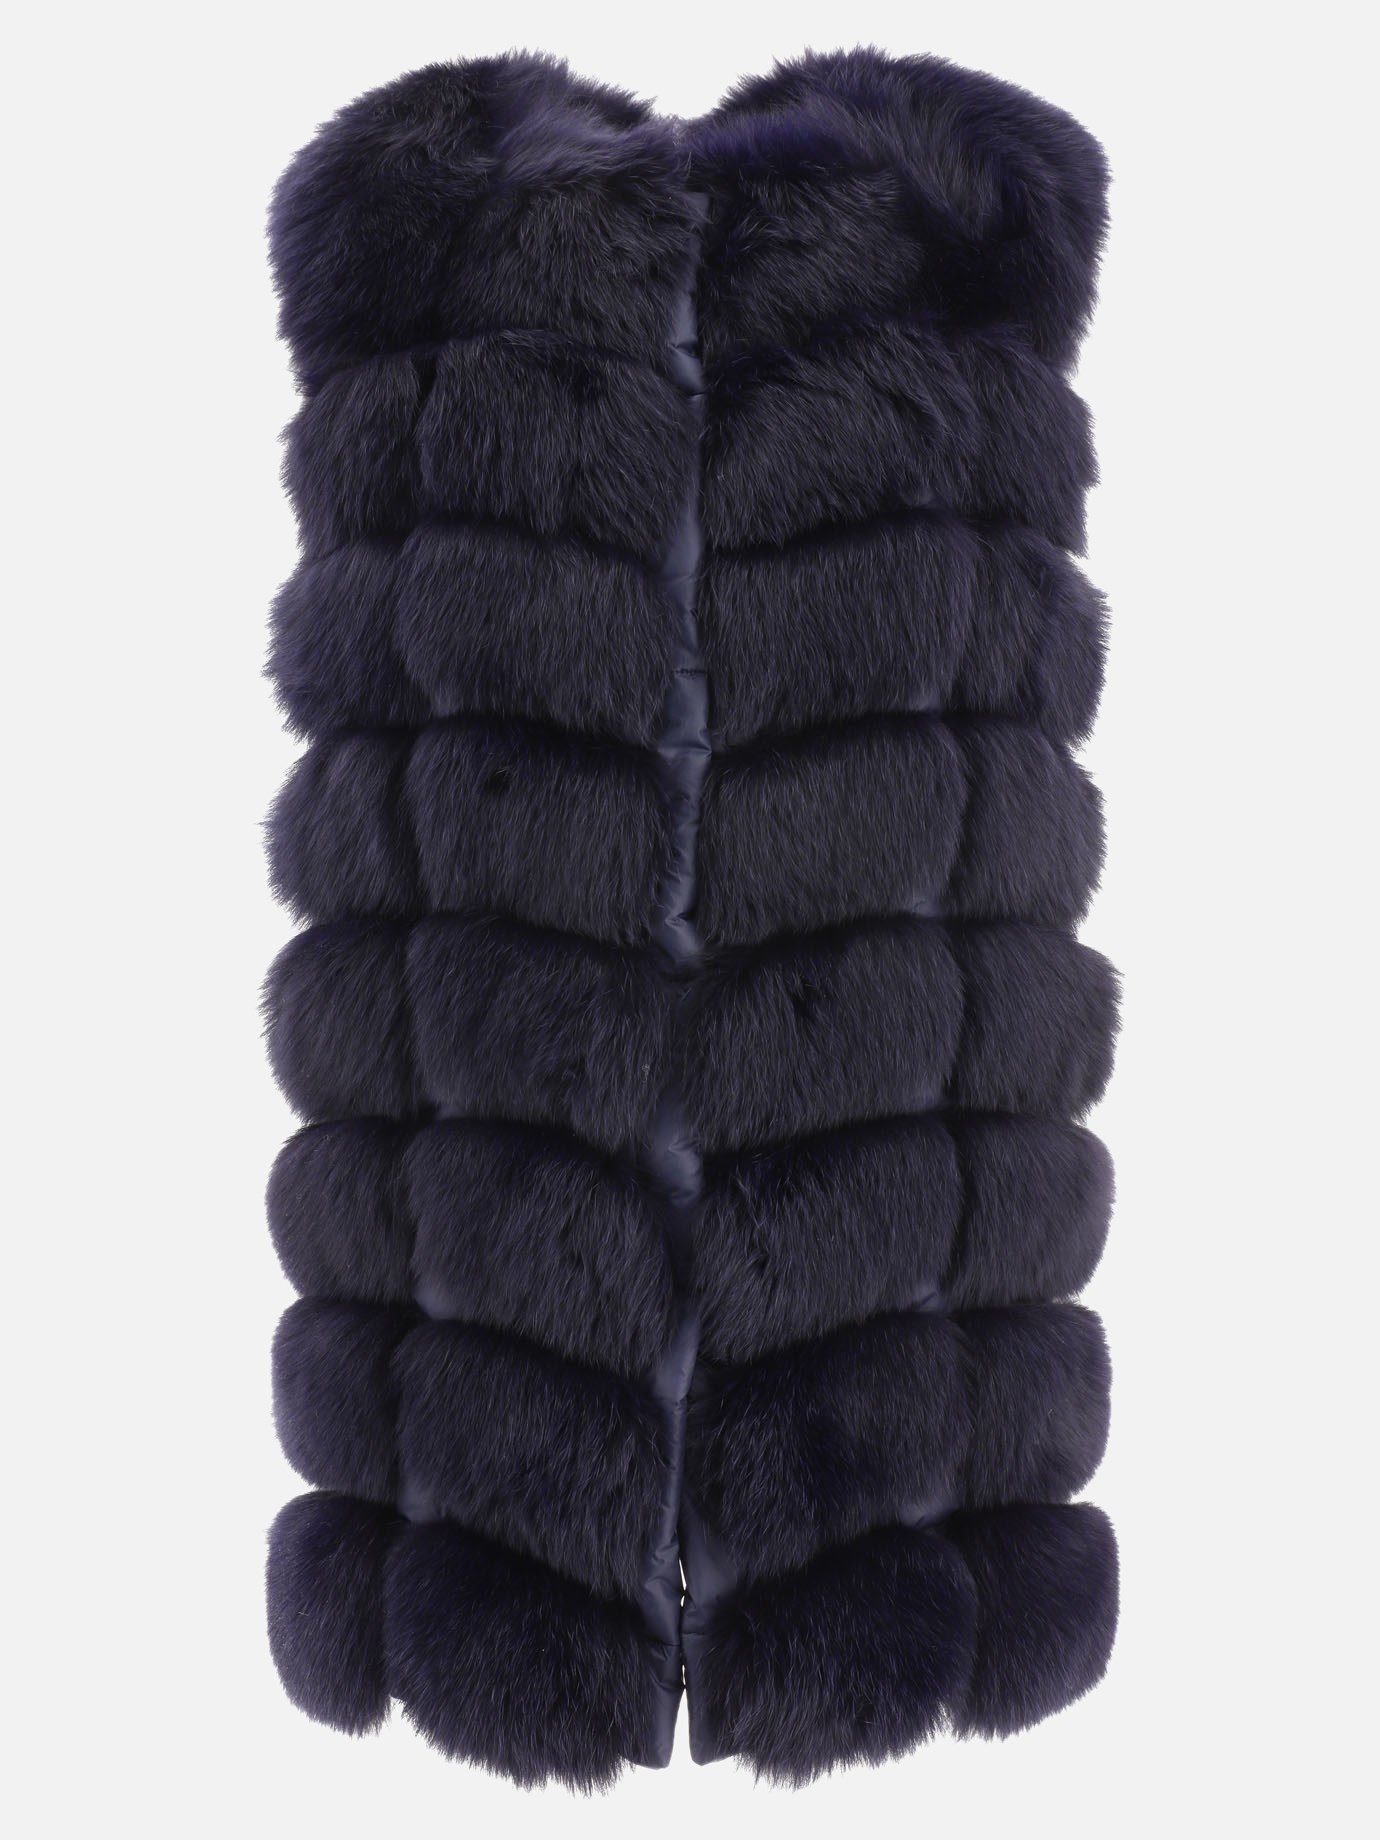  Quadrotti  fur jacket by Frame Fur